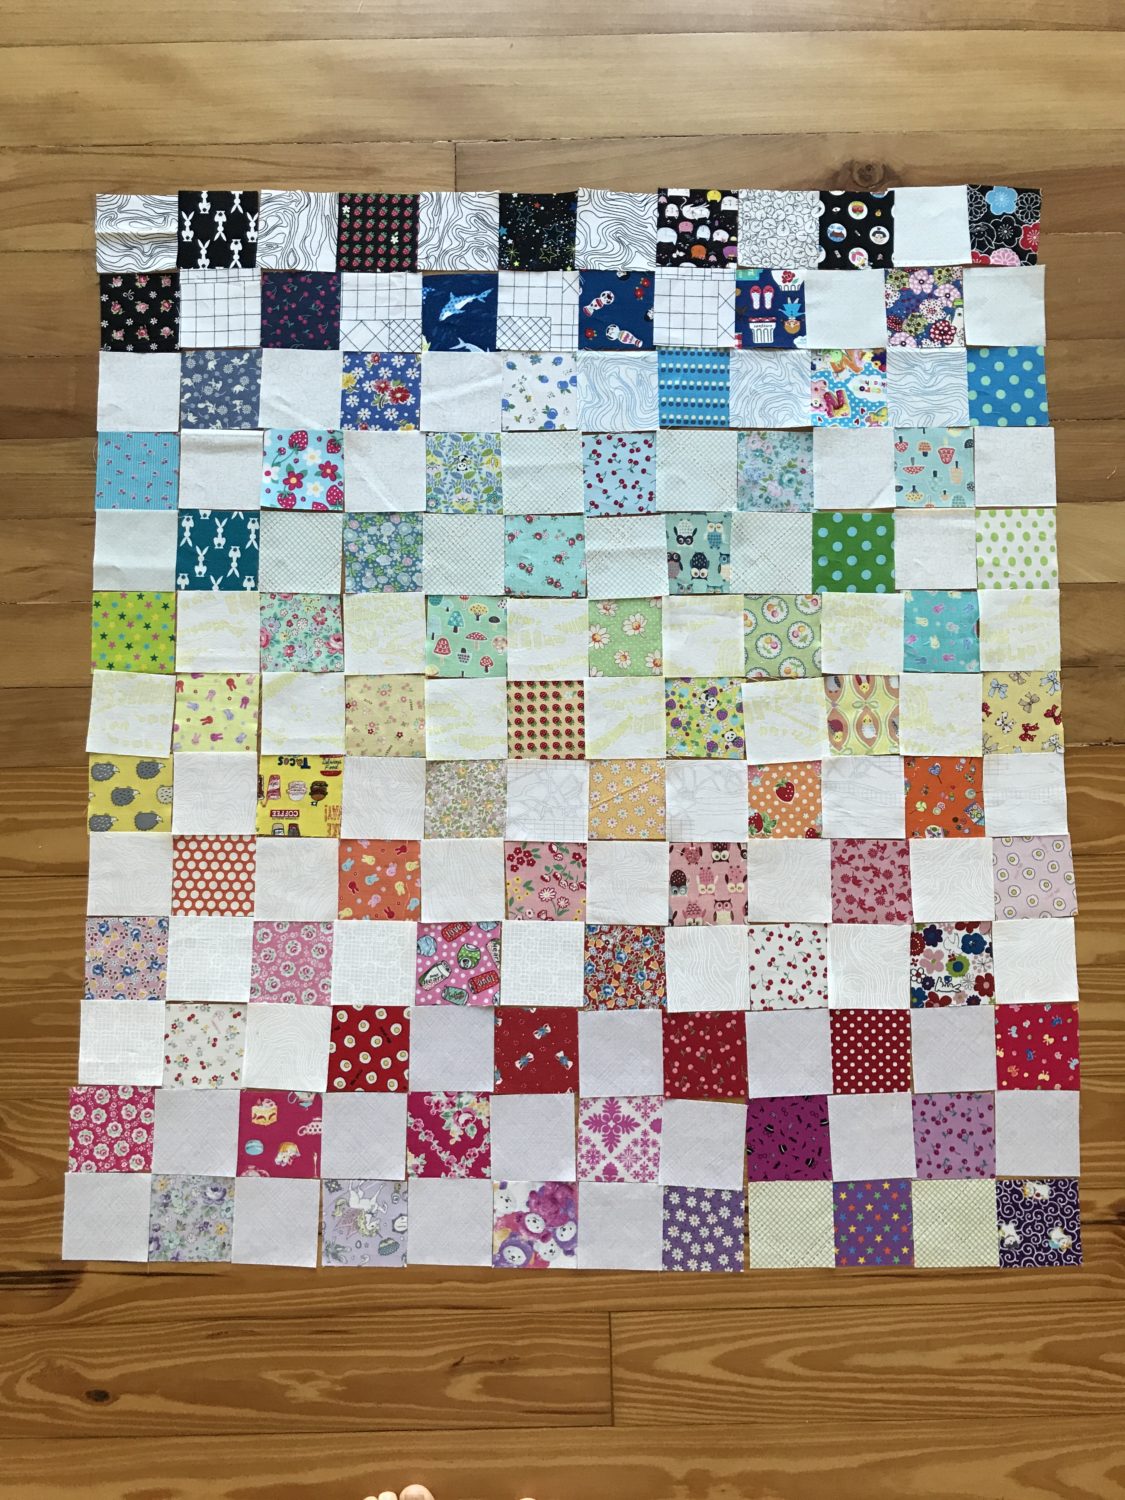 Colorful Quilts for my niece . carolyn friedlander